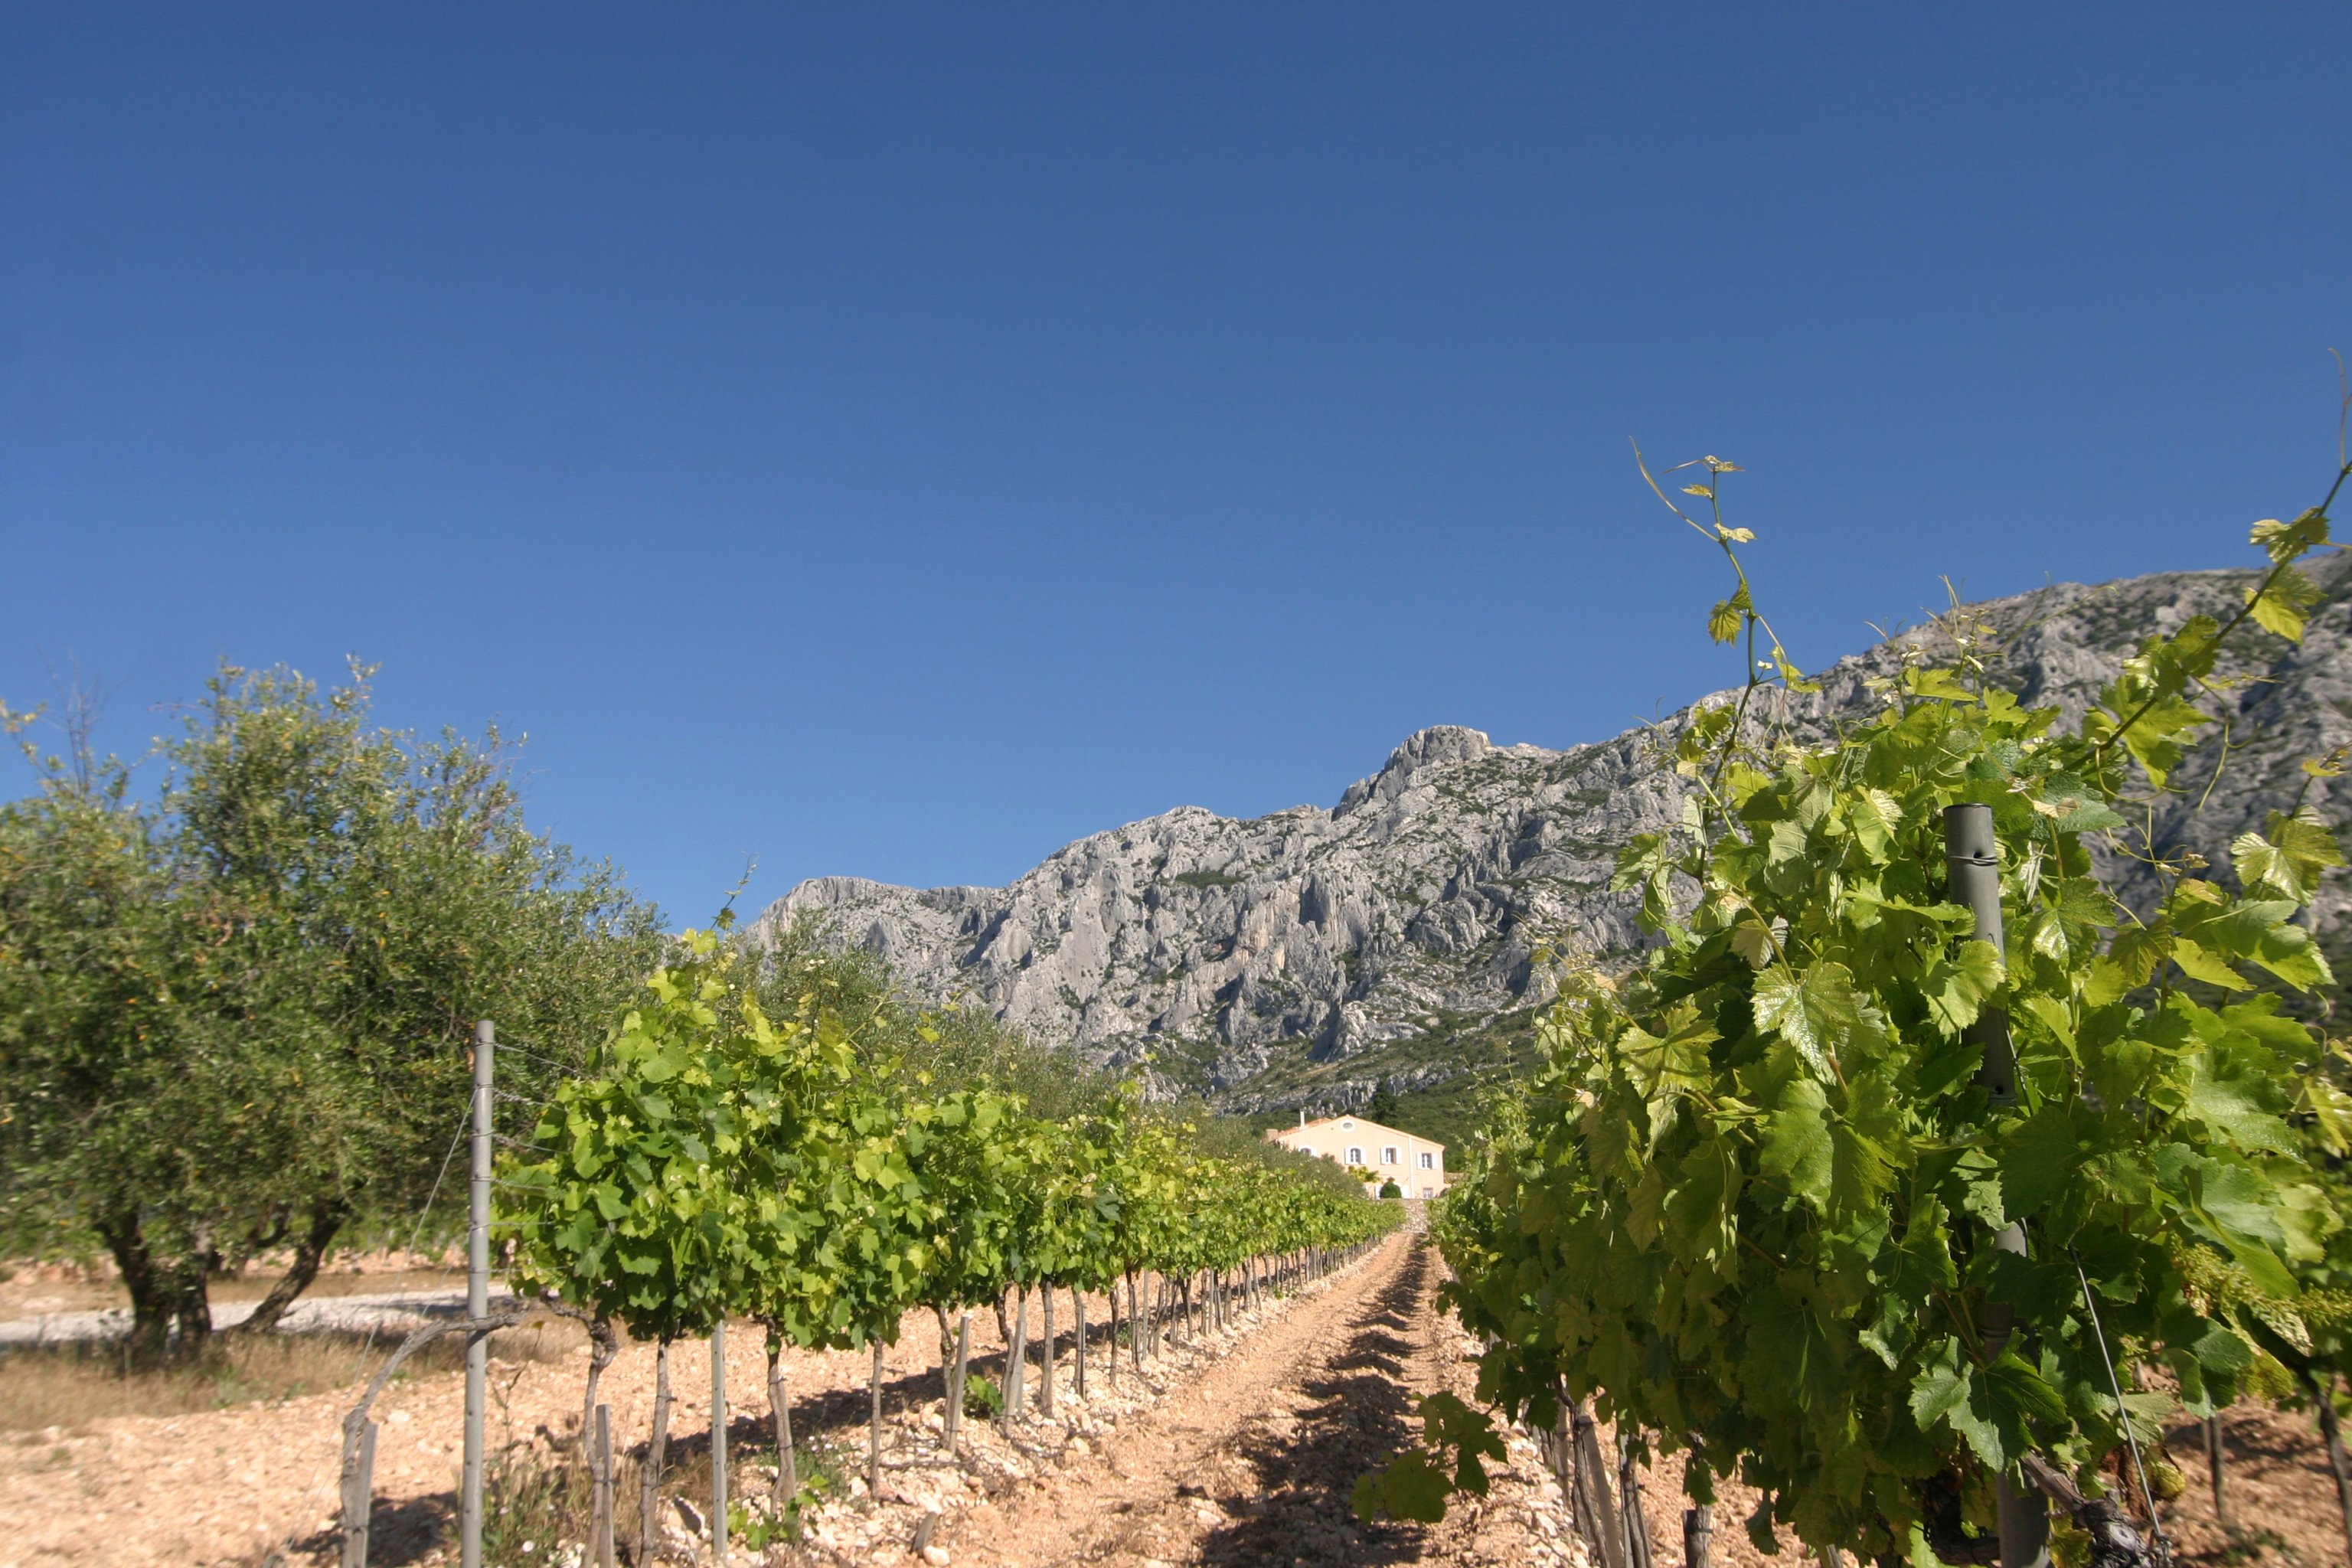 Provence : point viticole au 18 août